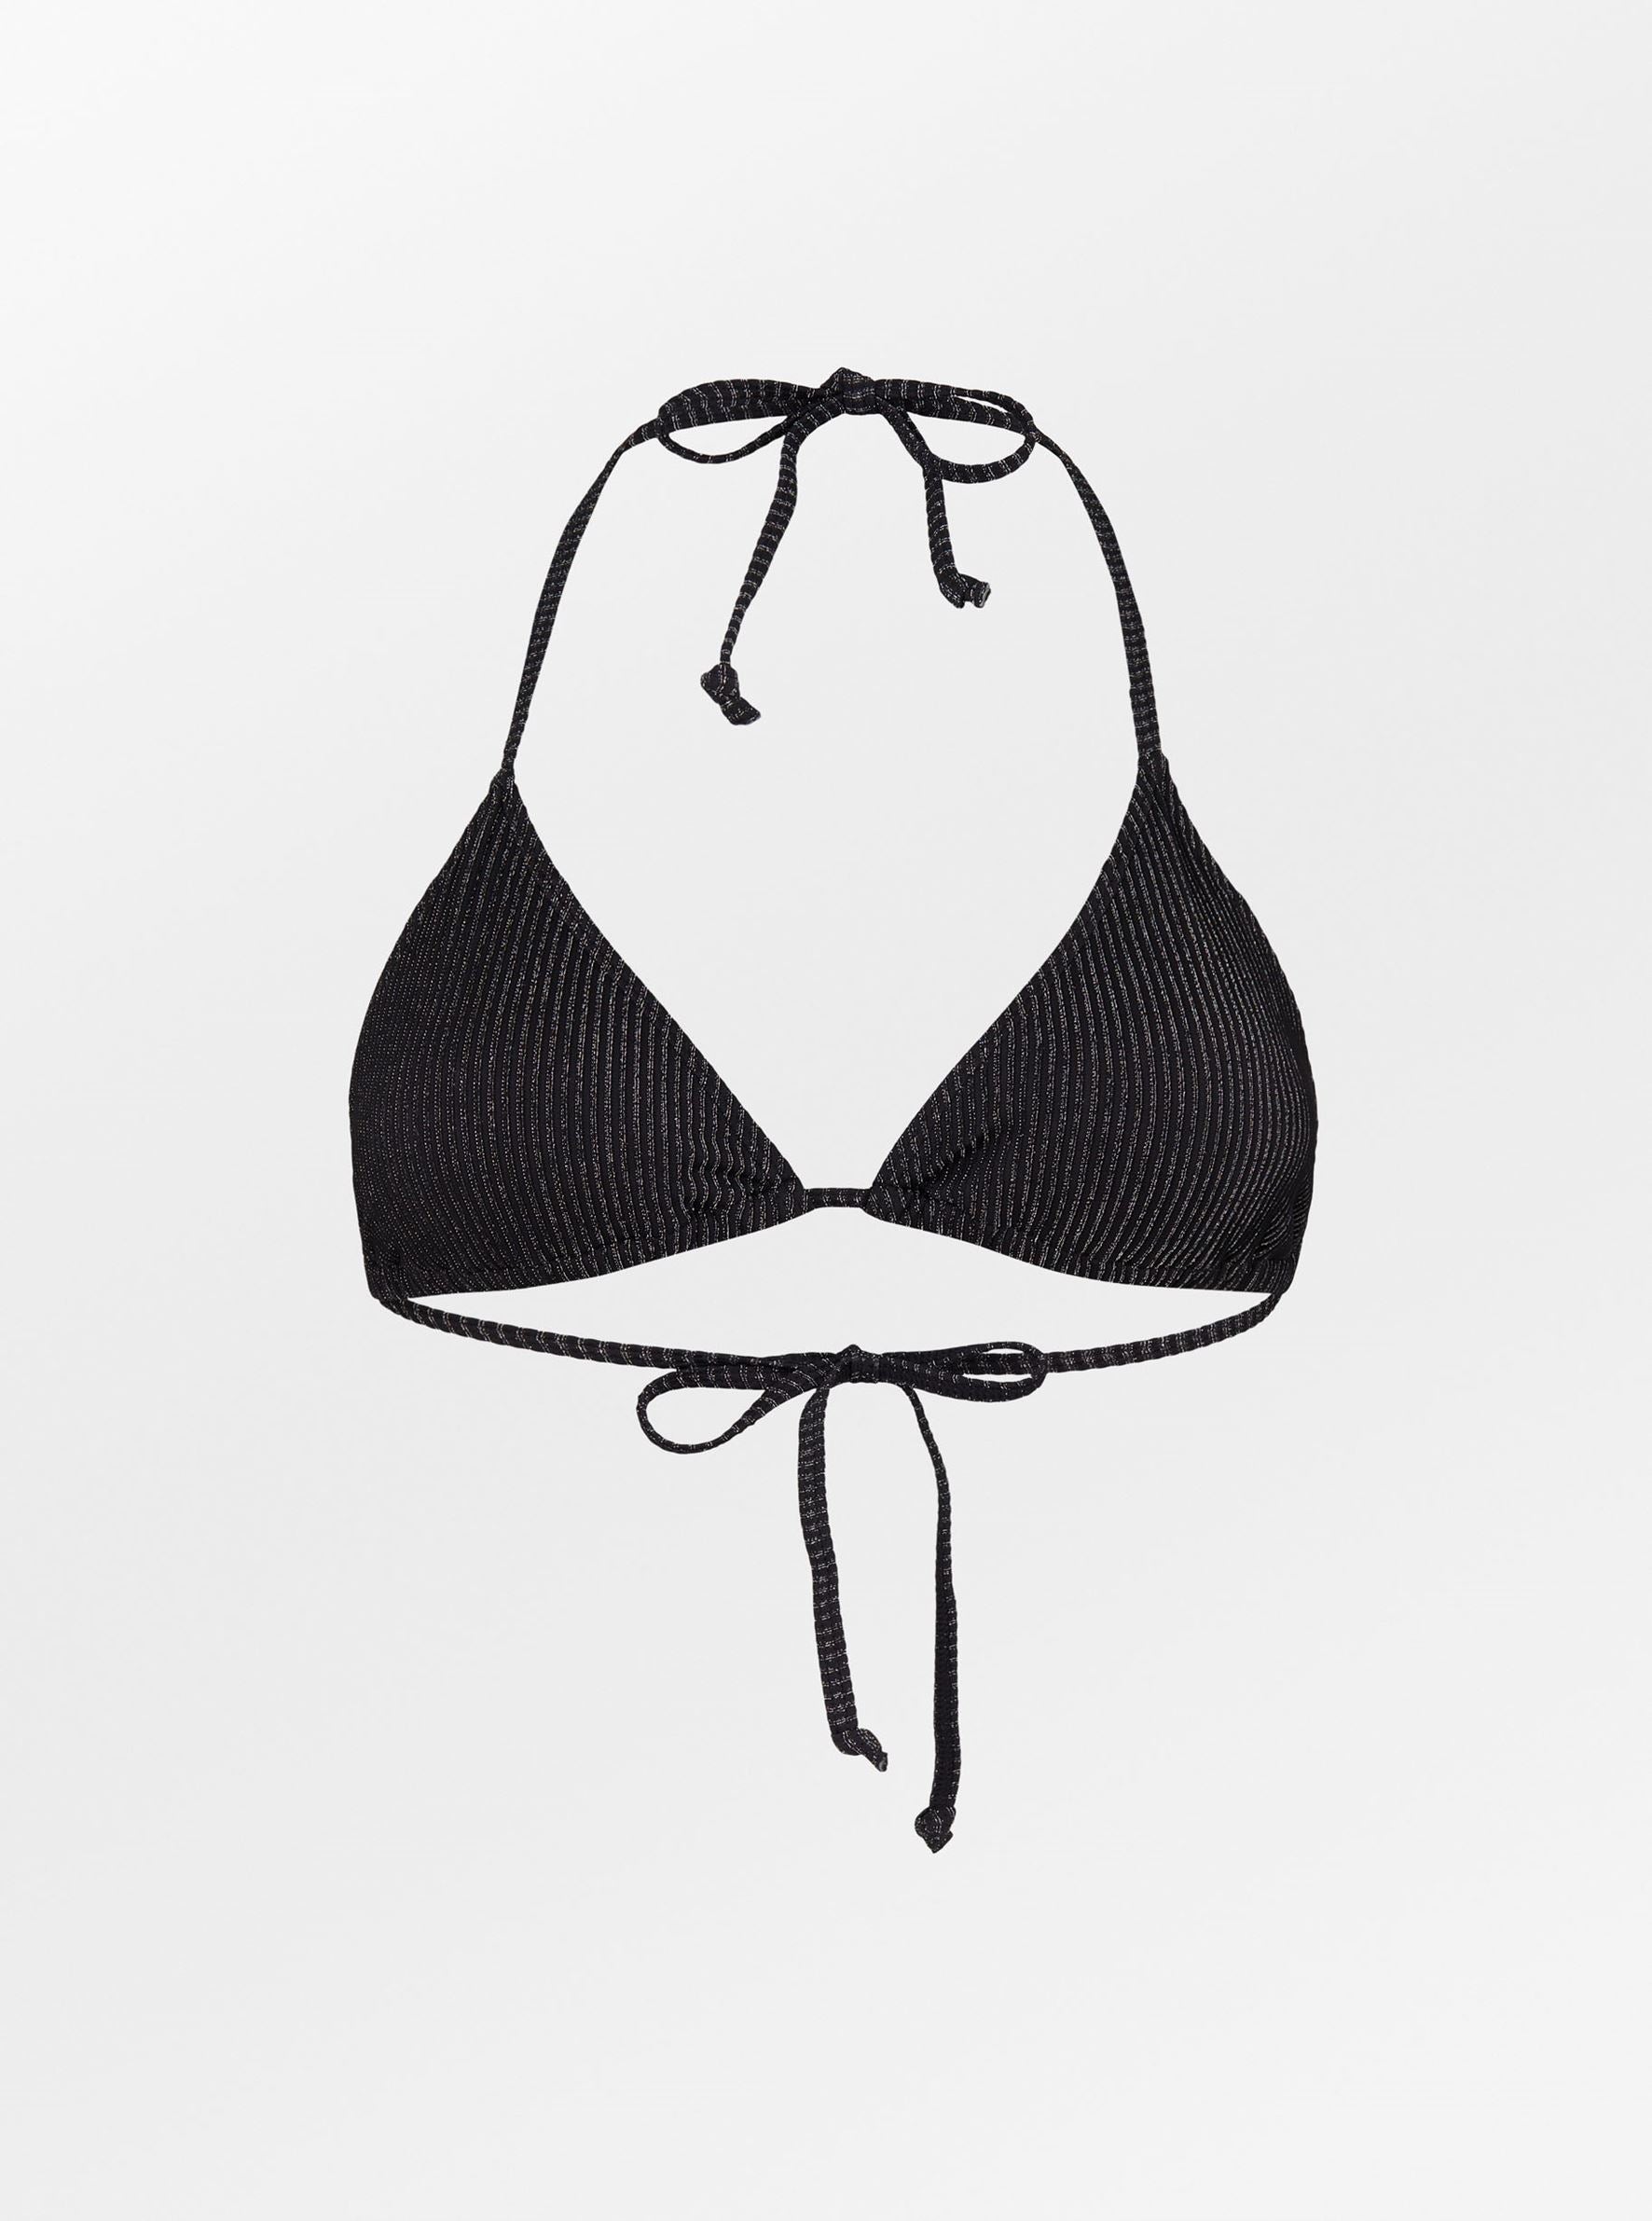 Becksöndergaard, Lyx Bel Bikini Top - Black, archive, archive, sale, sale